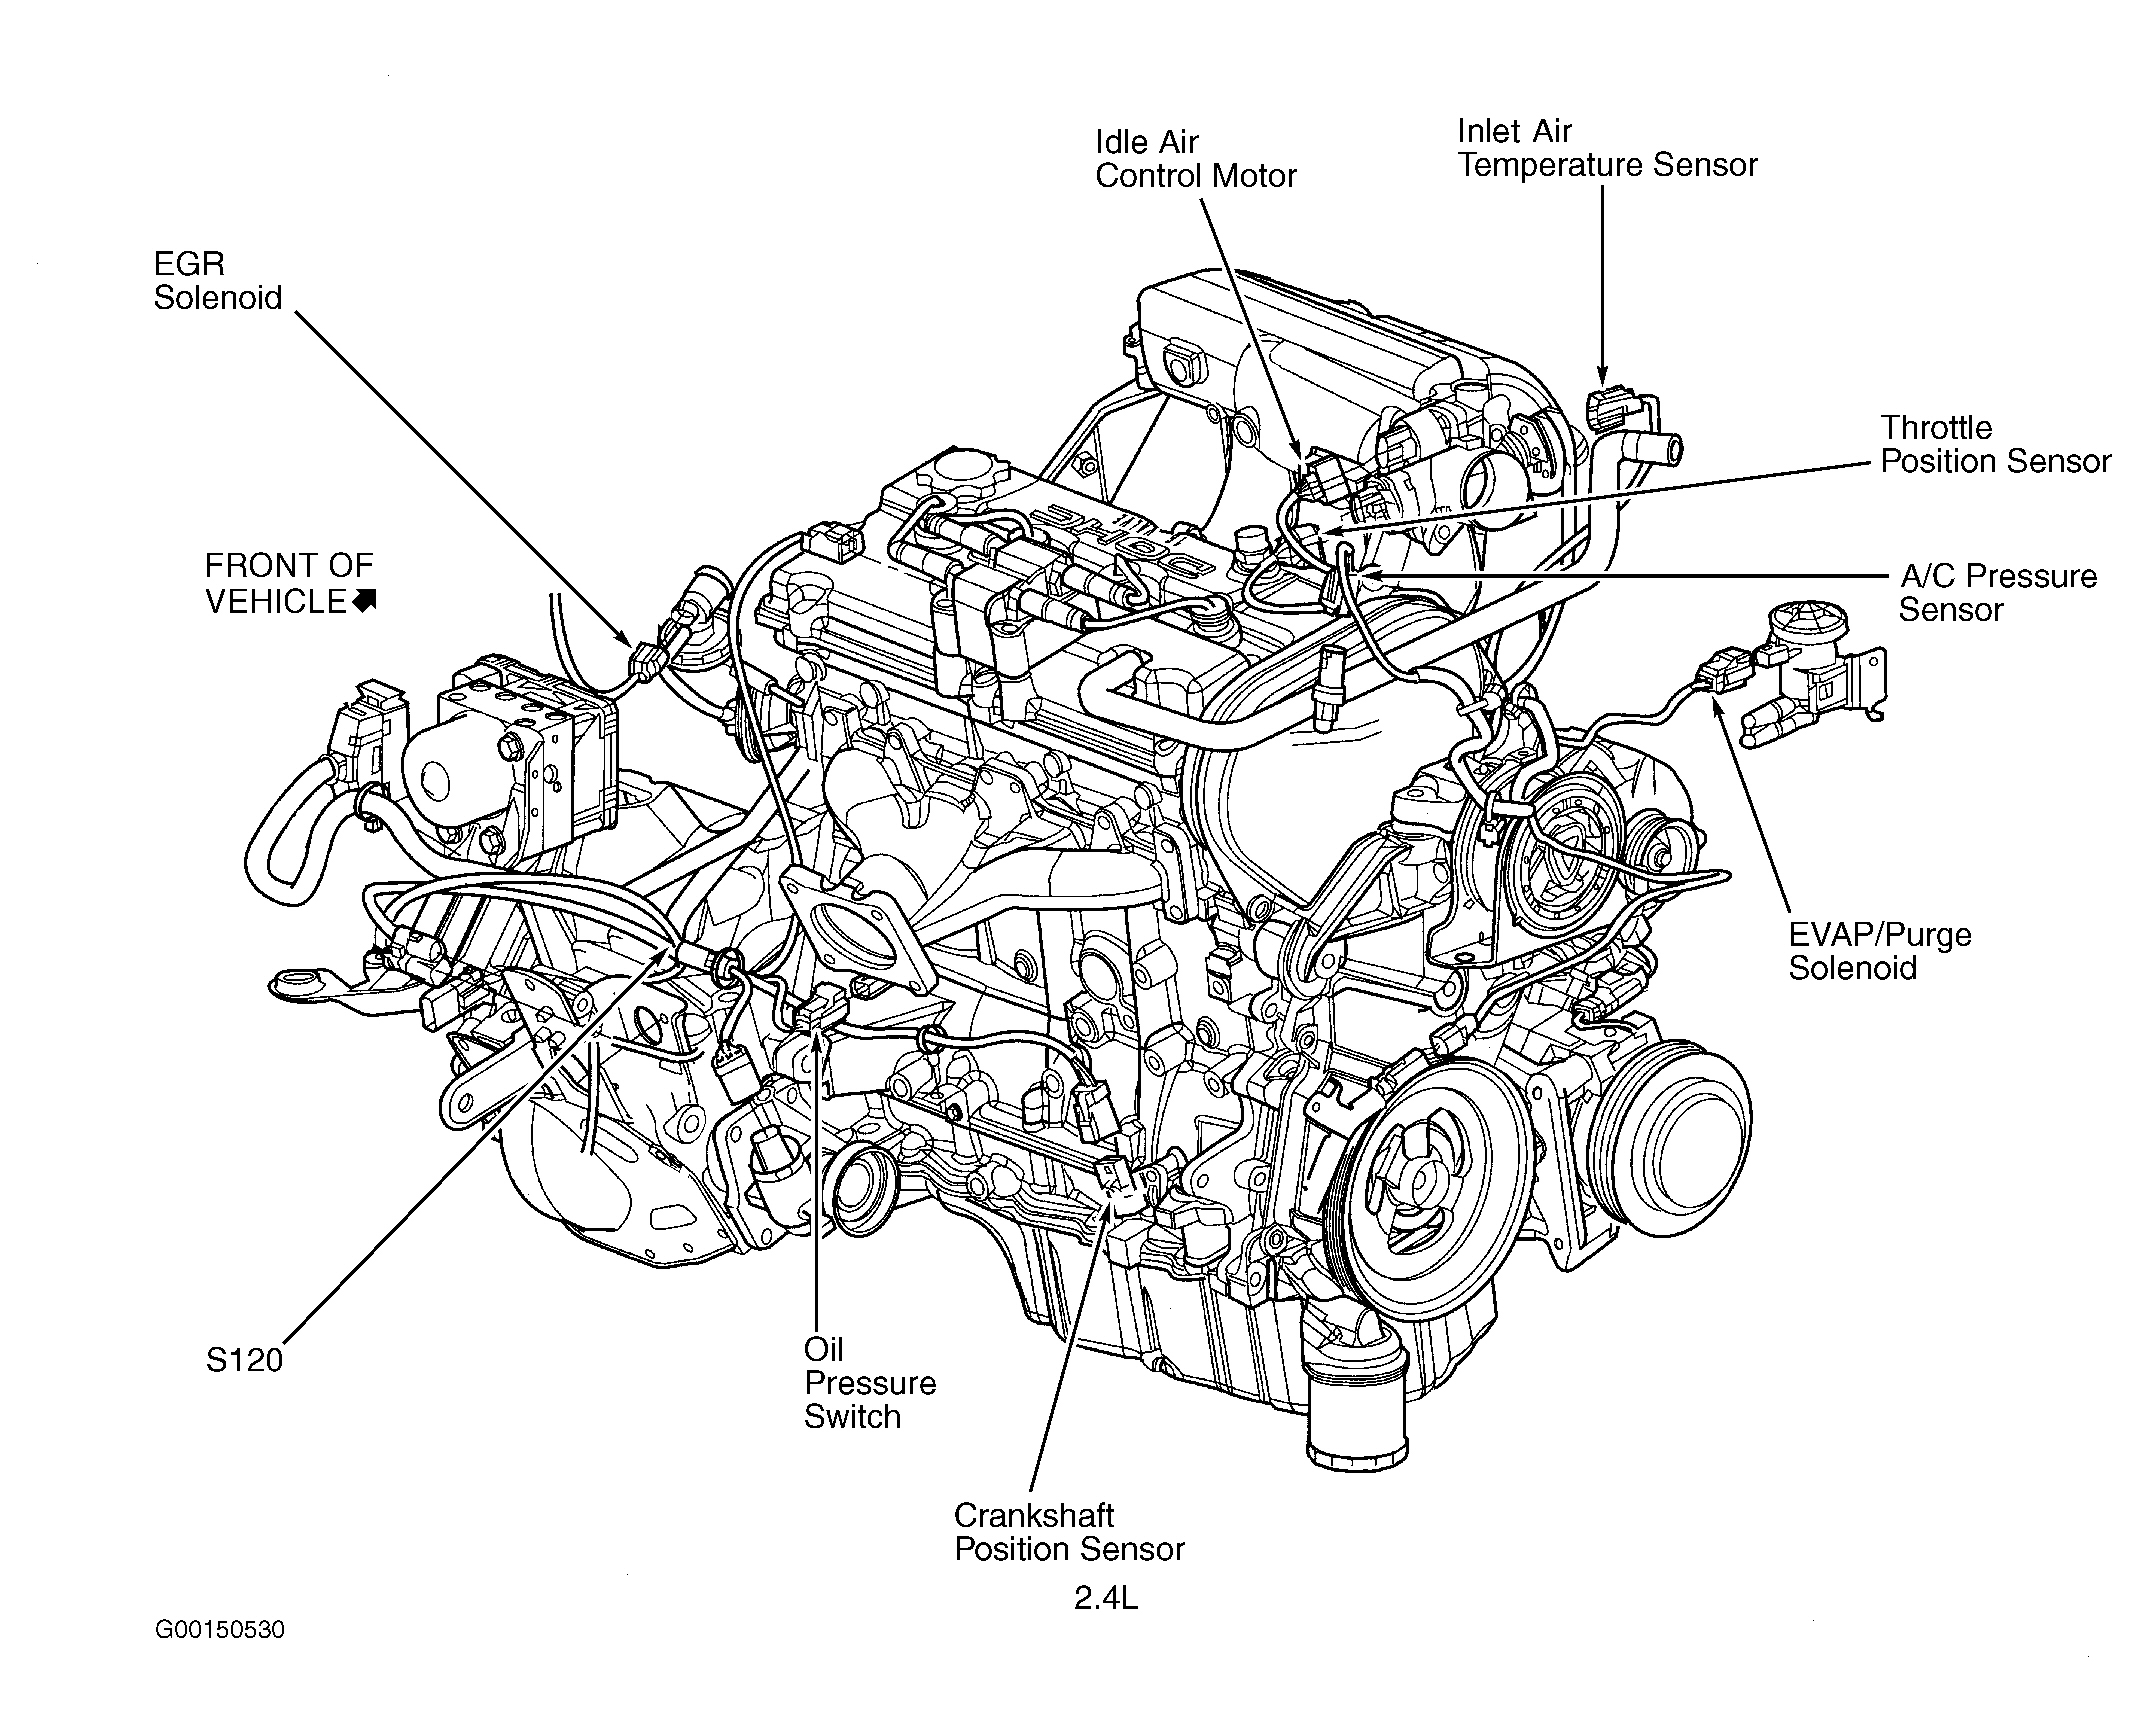 Dodge Caravan C/V 2003 - Component Locations -  Right Side Of Engine (2.4L)